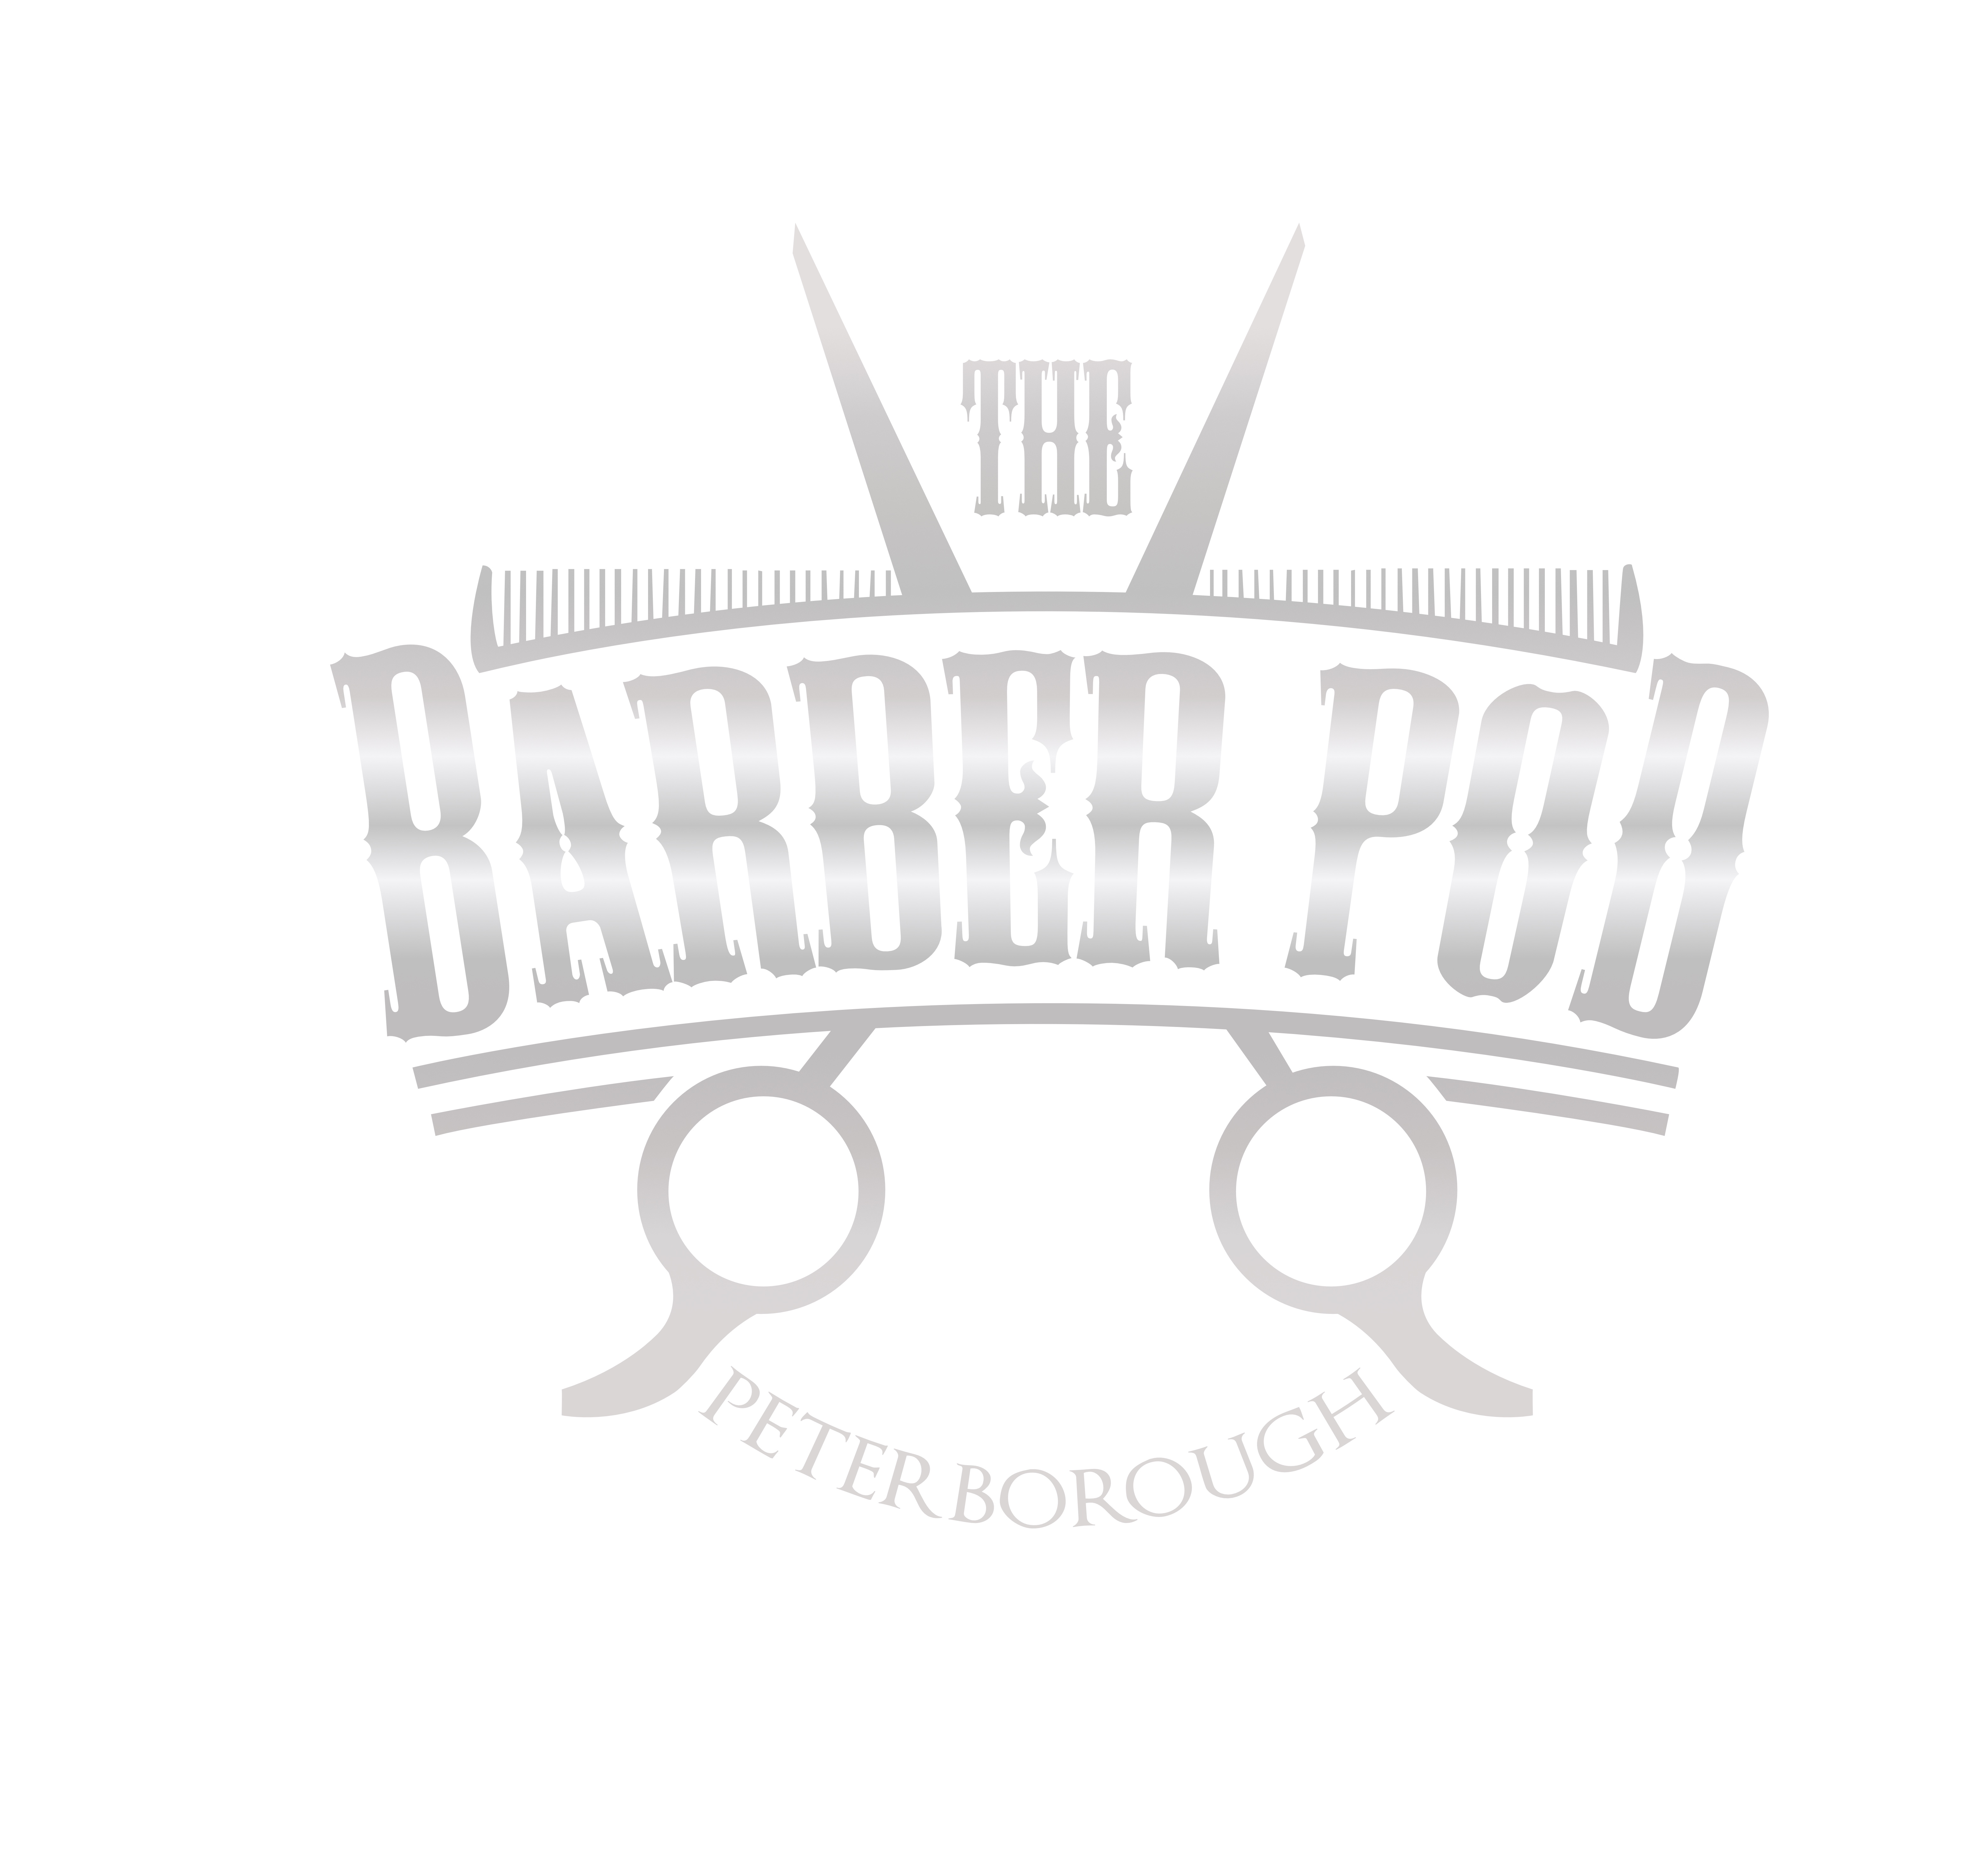 The Barber Pod Peterborough